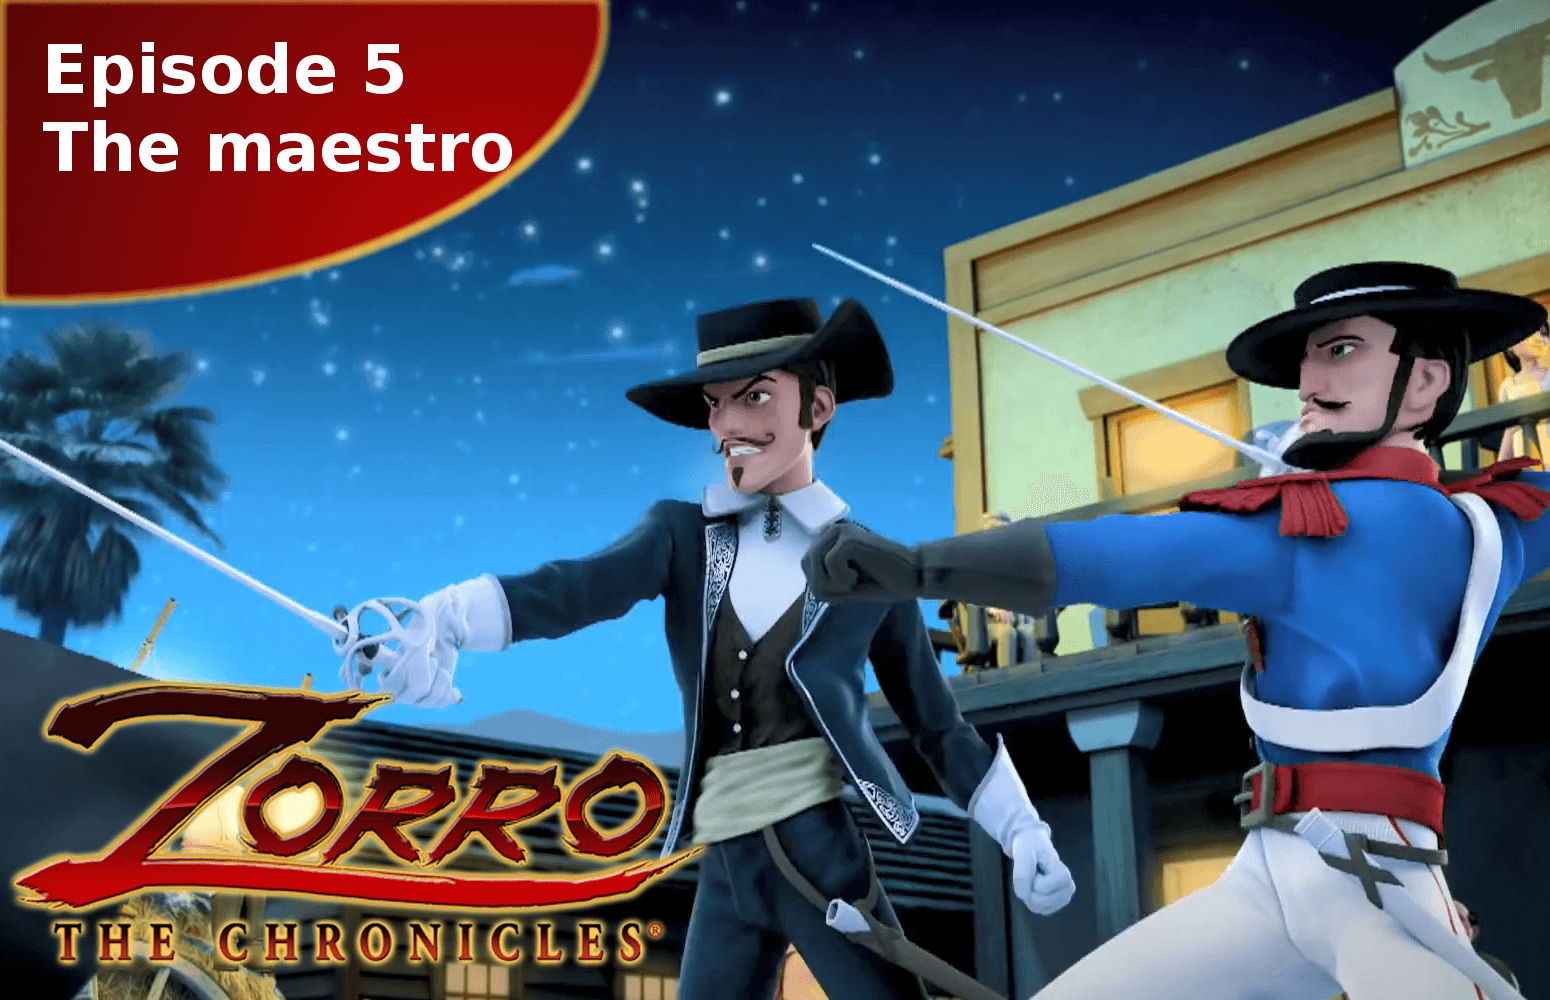 Zorro the Chronicles episode 5 The maestro